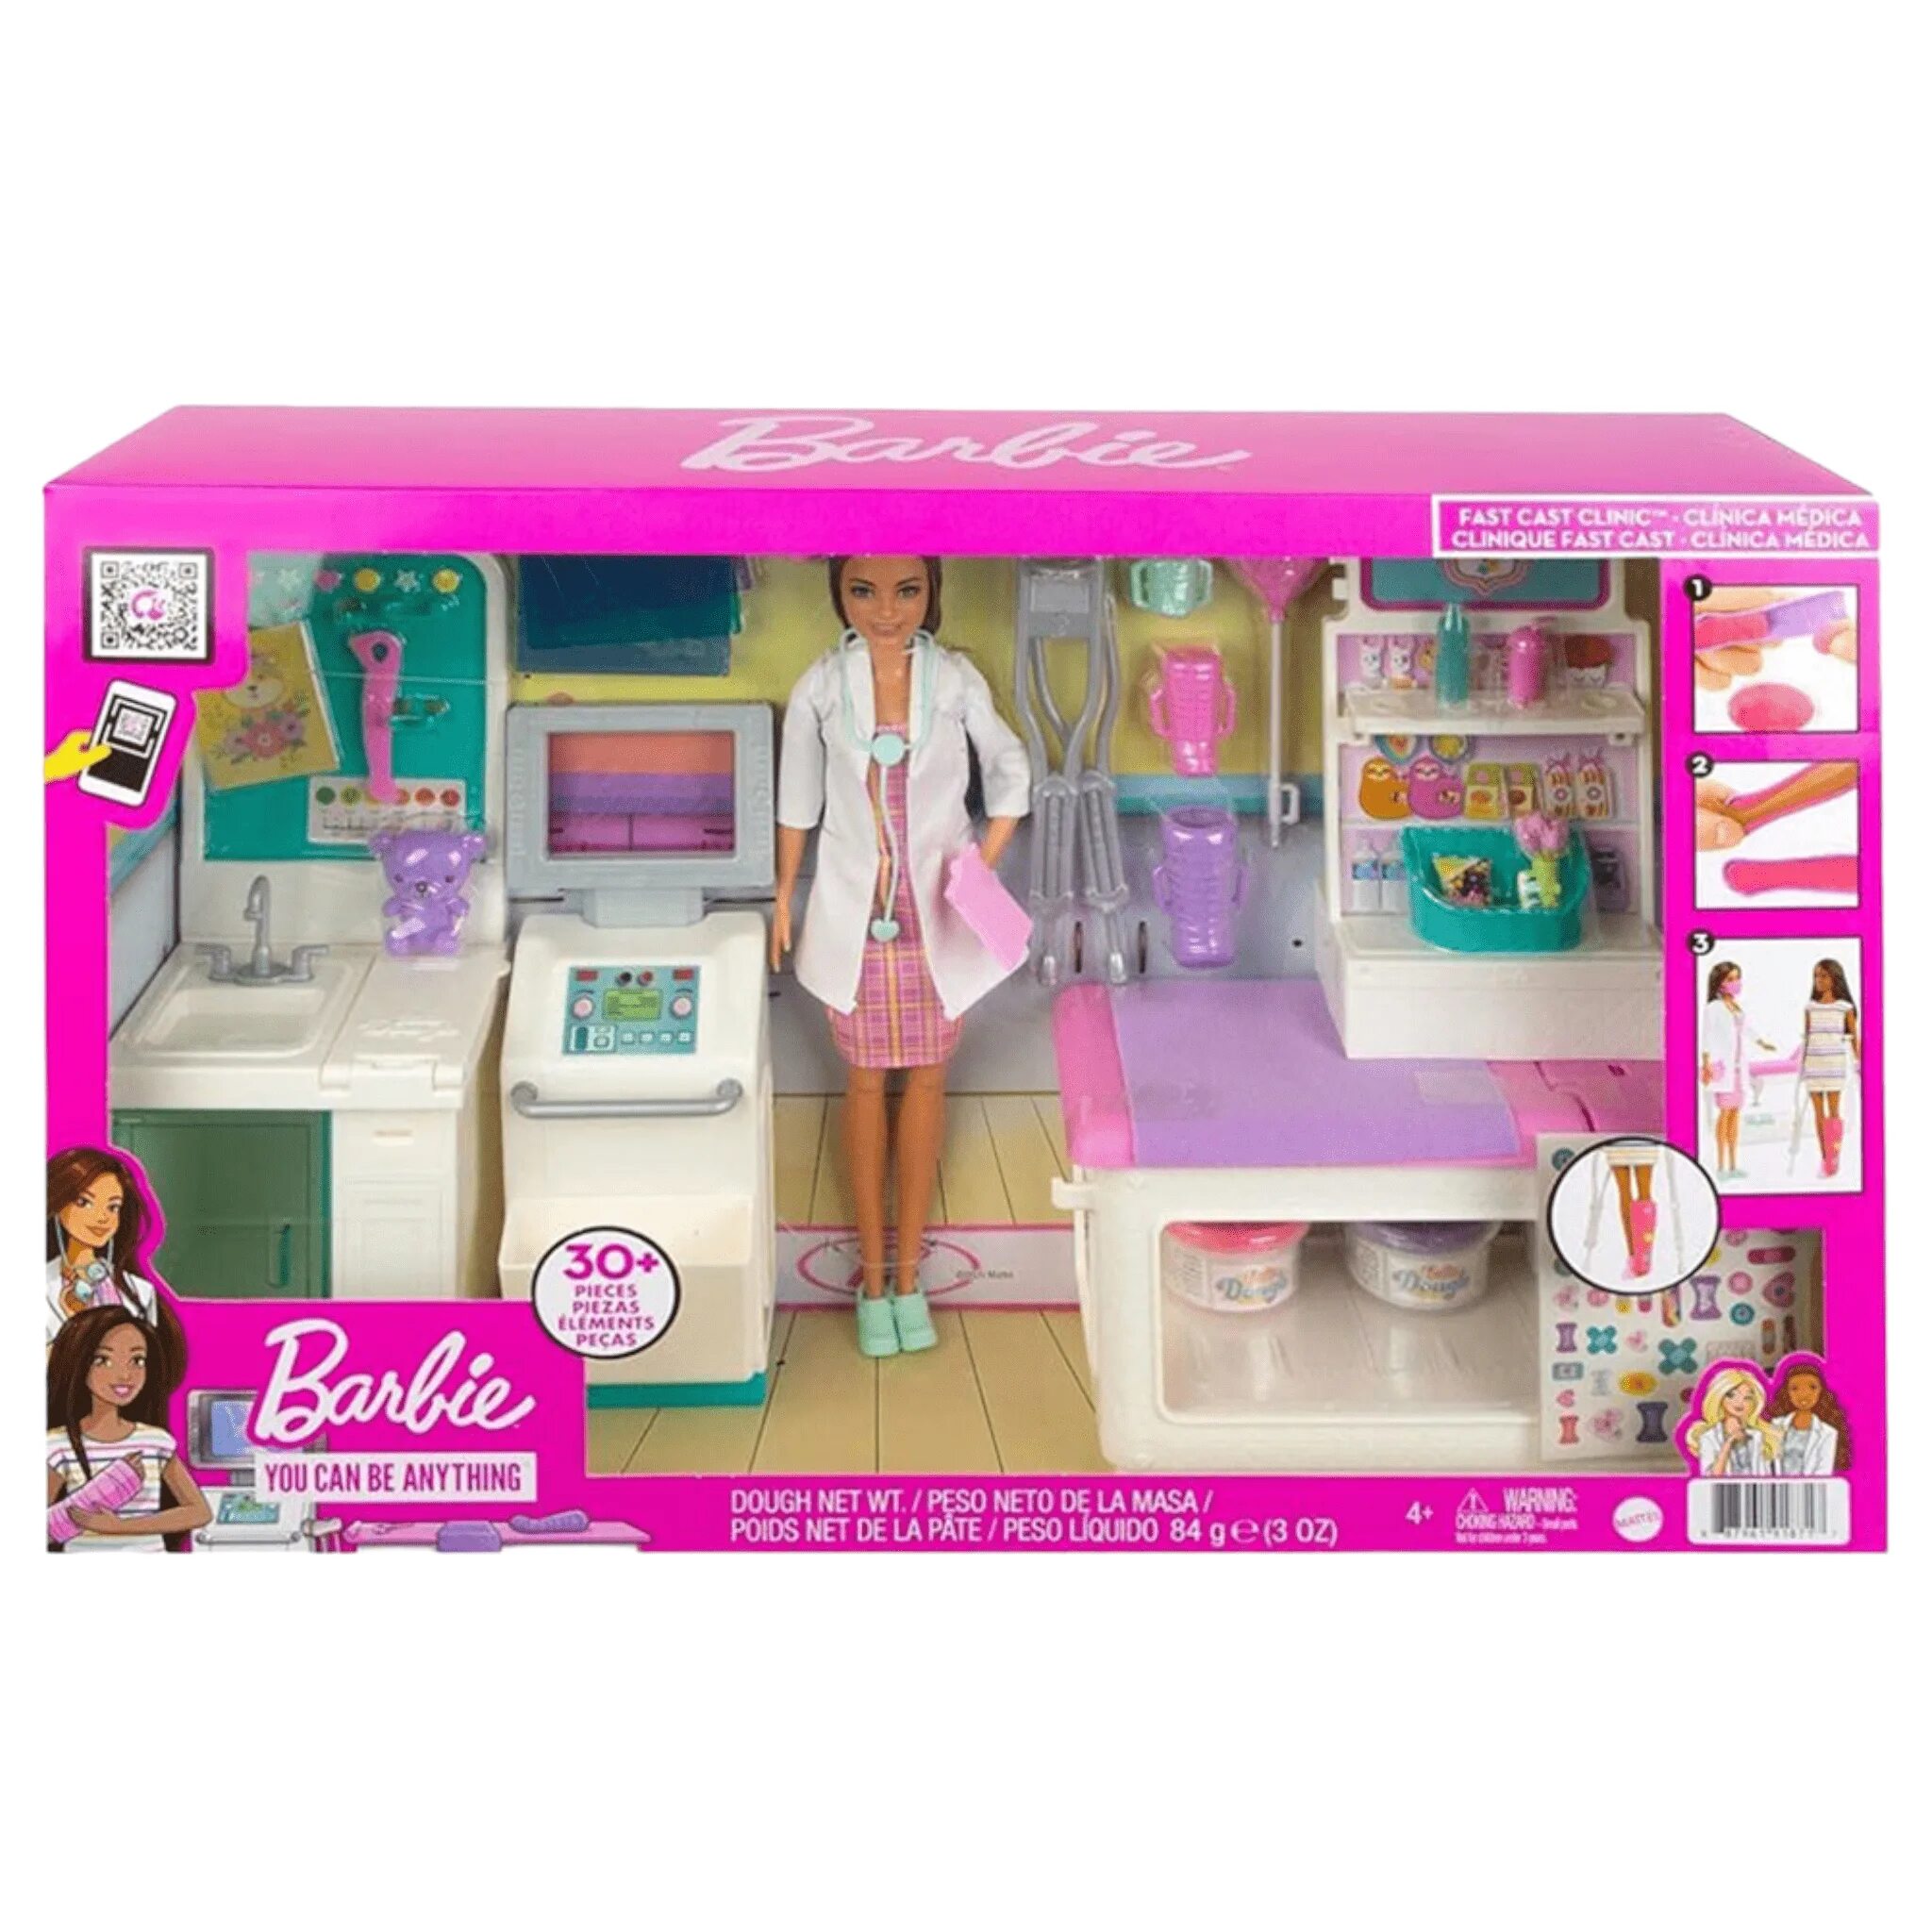 Faster casting. Набор Барби клиника. Набор игровой Barbie клиника gtn61. Игровой набор Mattel Barbie клиника. Куклы Барби ветеринарная клиника.